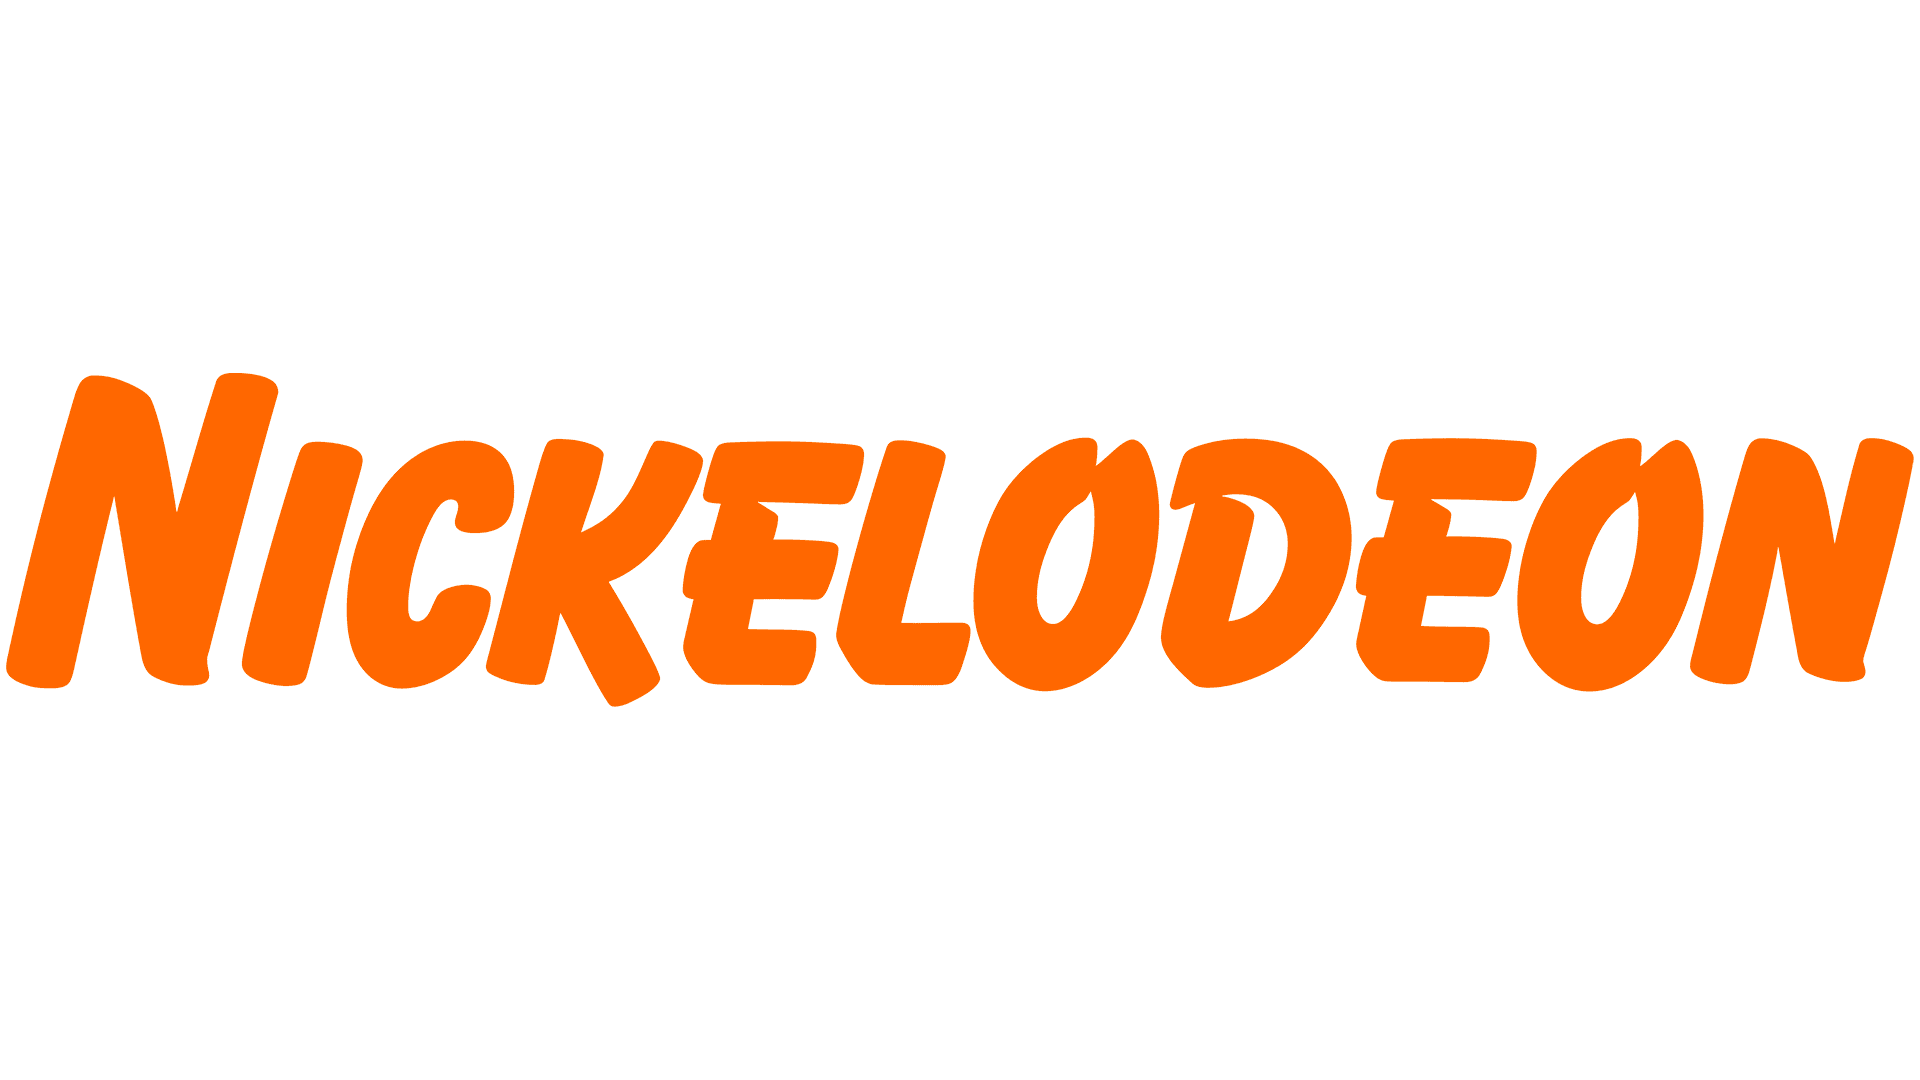 Nickelodeon logo. Никелодеон логотип 1984. Nickelodeon Россия logo. Оранжевый логотип Nickelodeon. Никелодеон логотип 2009.